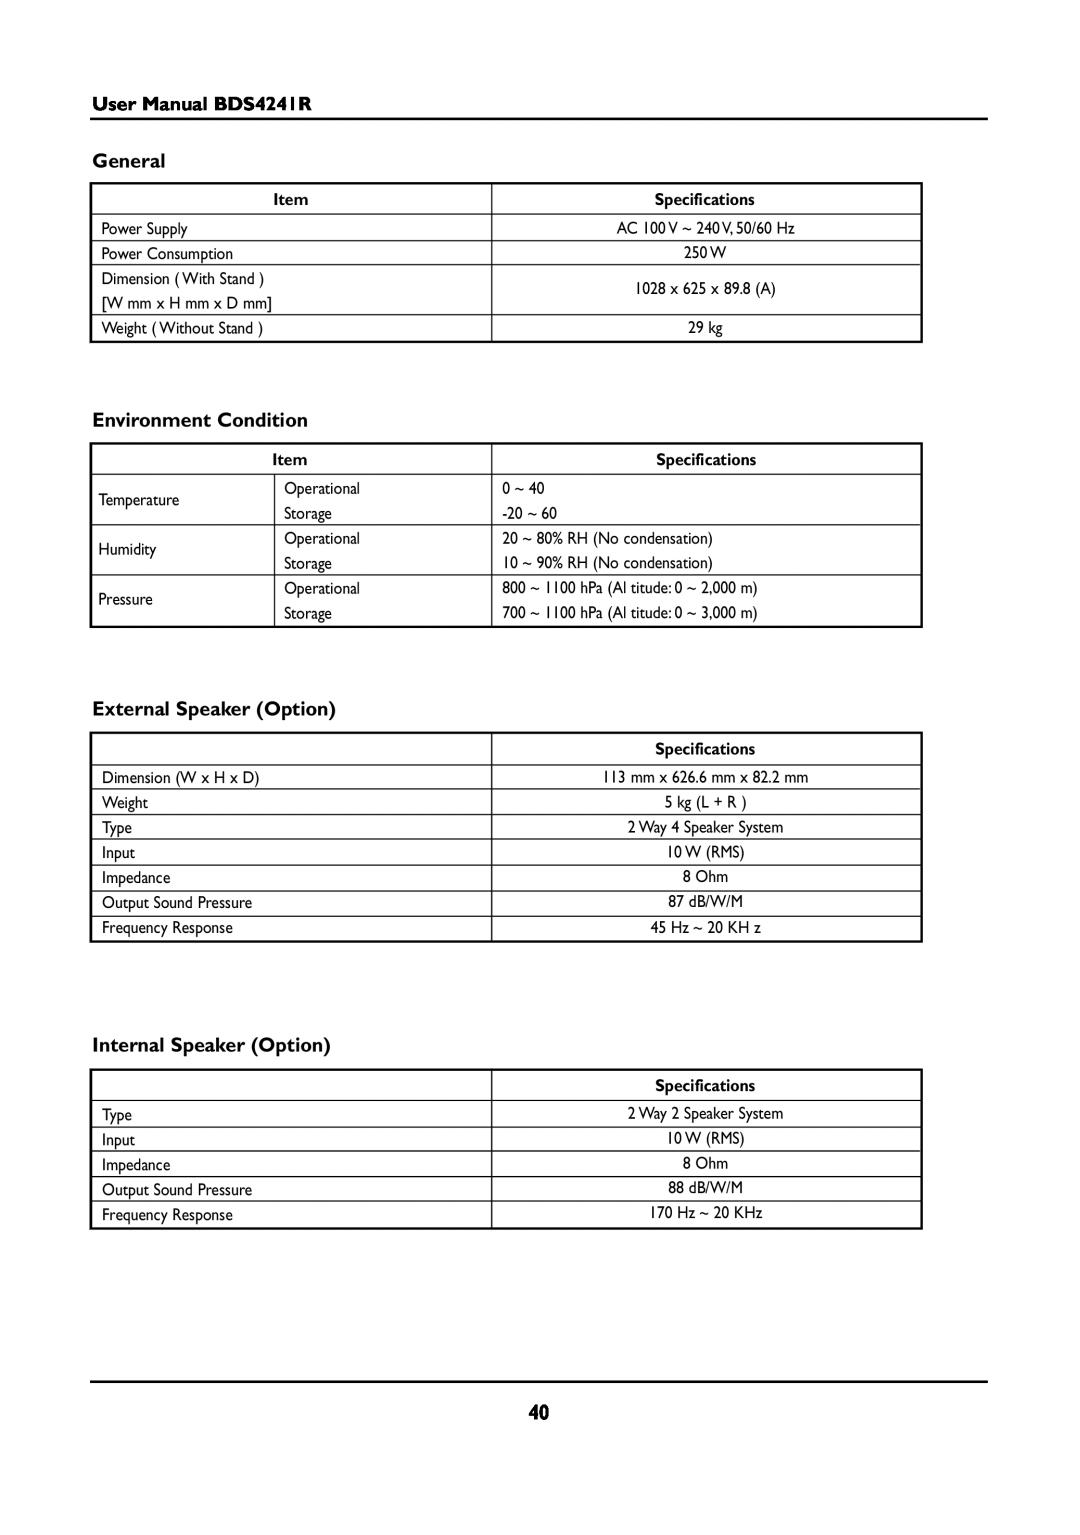 Philips BDS4241R/00 manual General, Environment Condition, External Speaker Option, Internal Speaker Option 